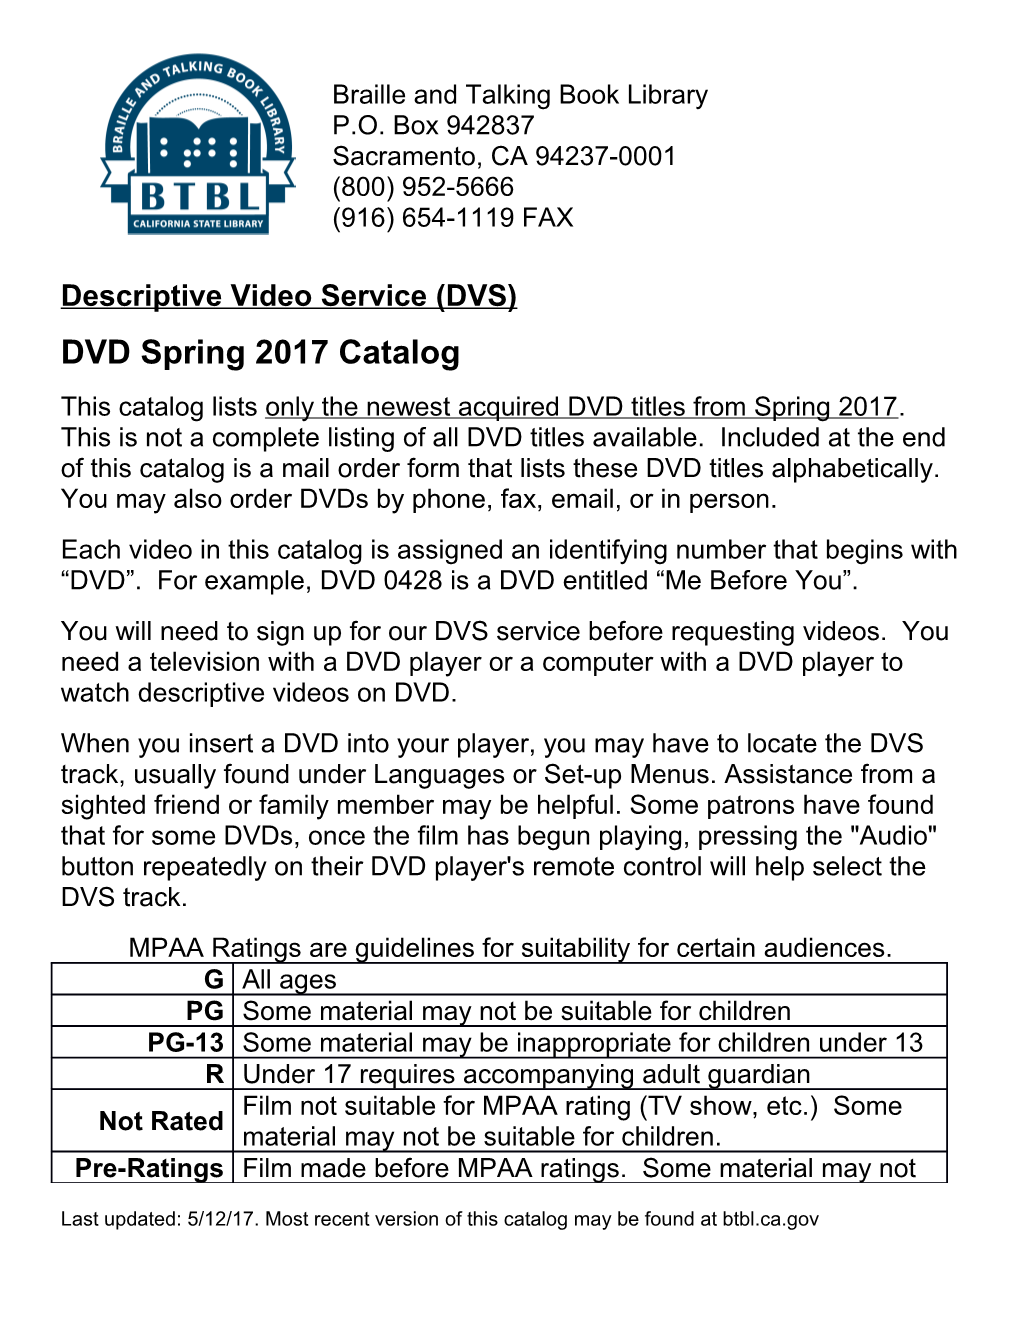 DVD Spring 2017 Catalog